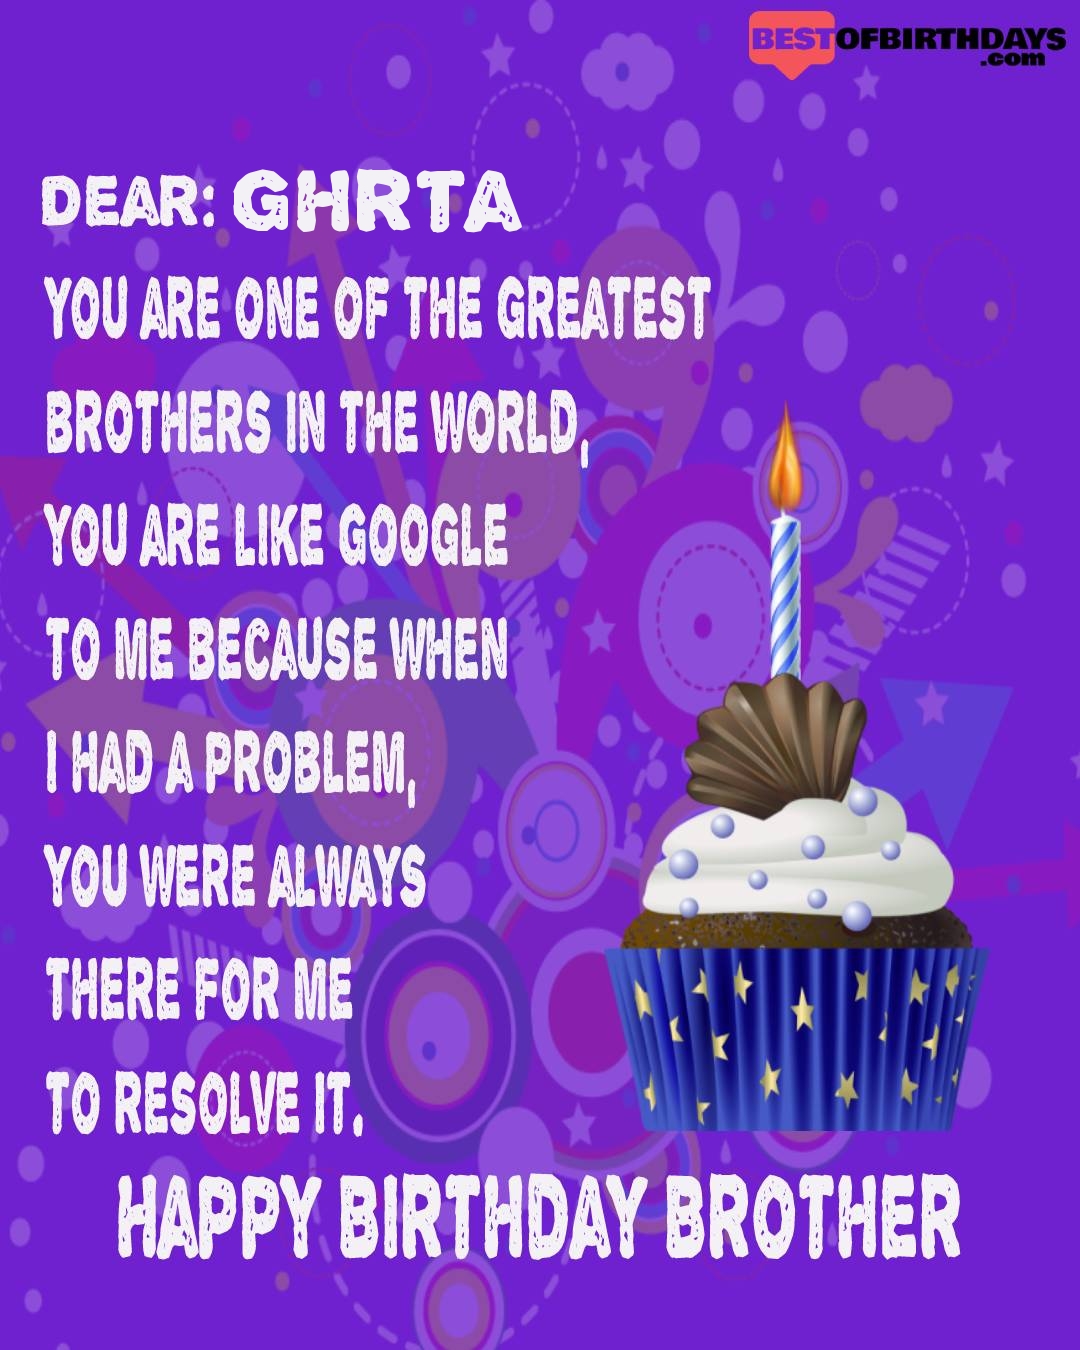 Happy birthday ghrta bhai brother bro